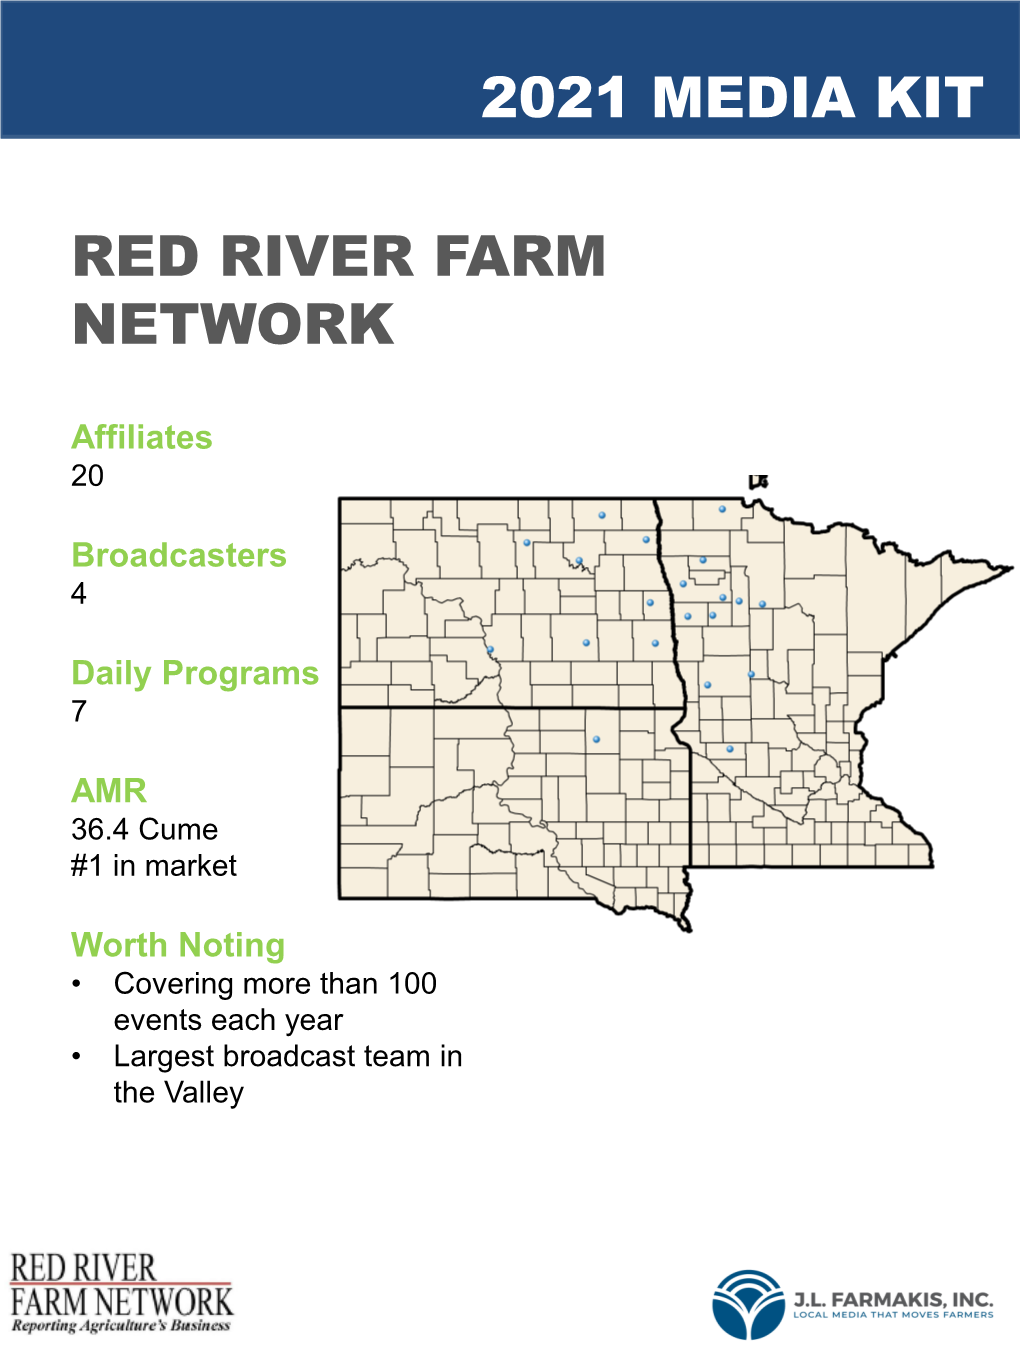 2021 Media Kit Red River Farm Network